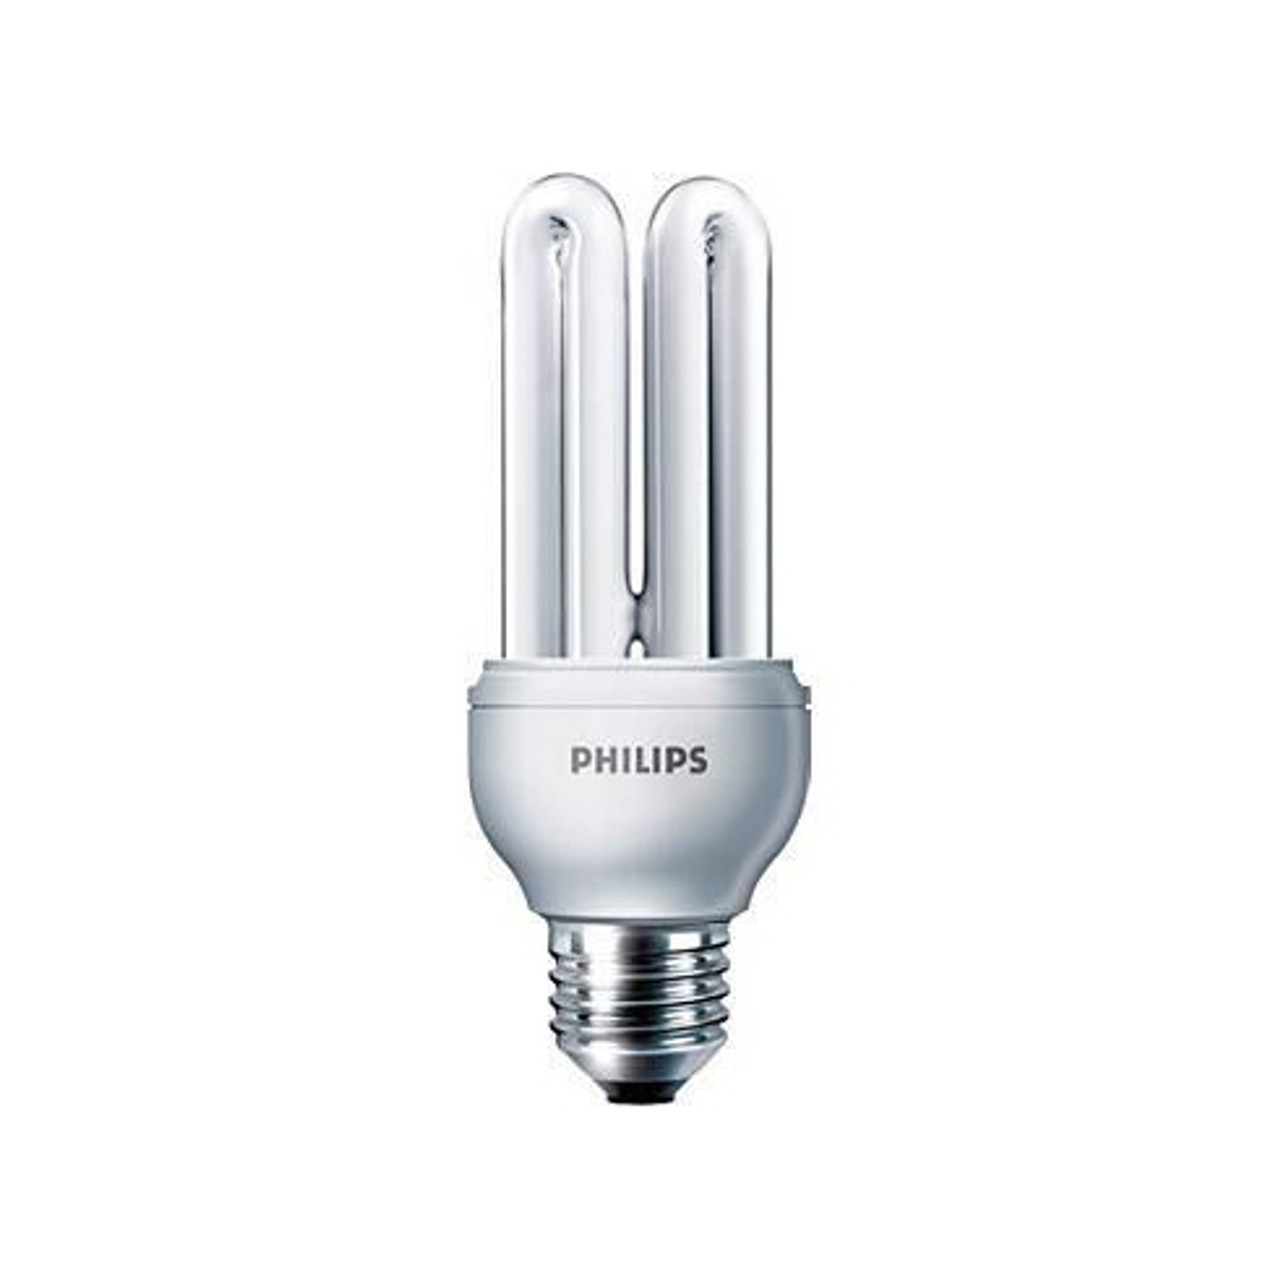 Philips Genie 11w Fluorescent Energy Saving Light BC 224077 Warm White